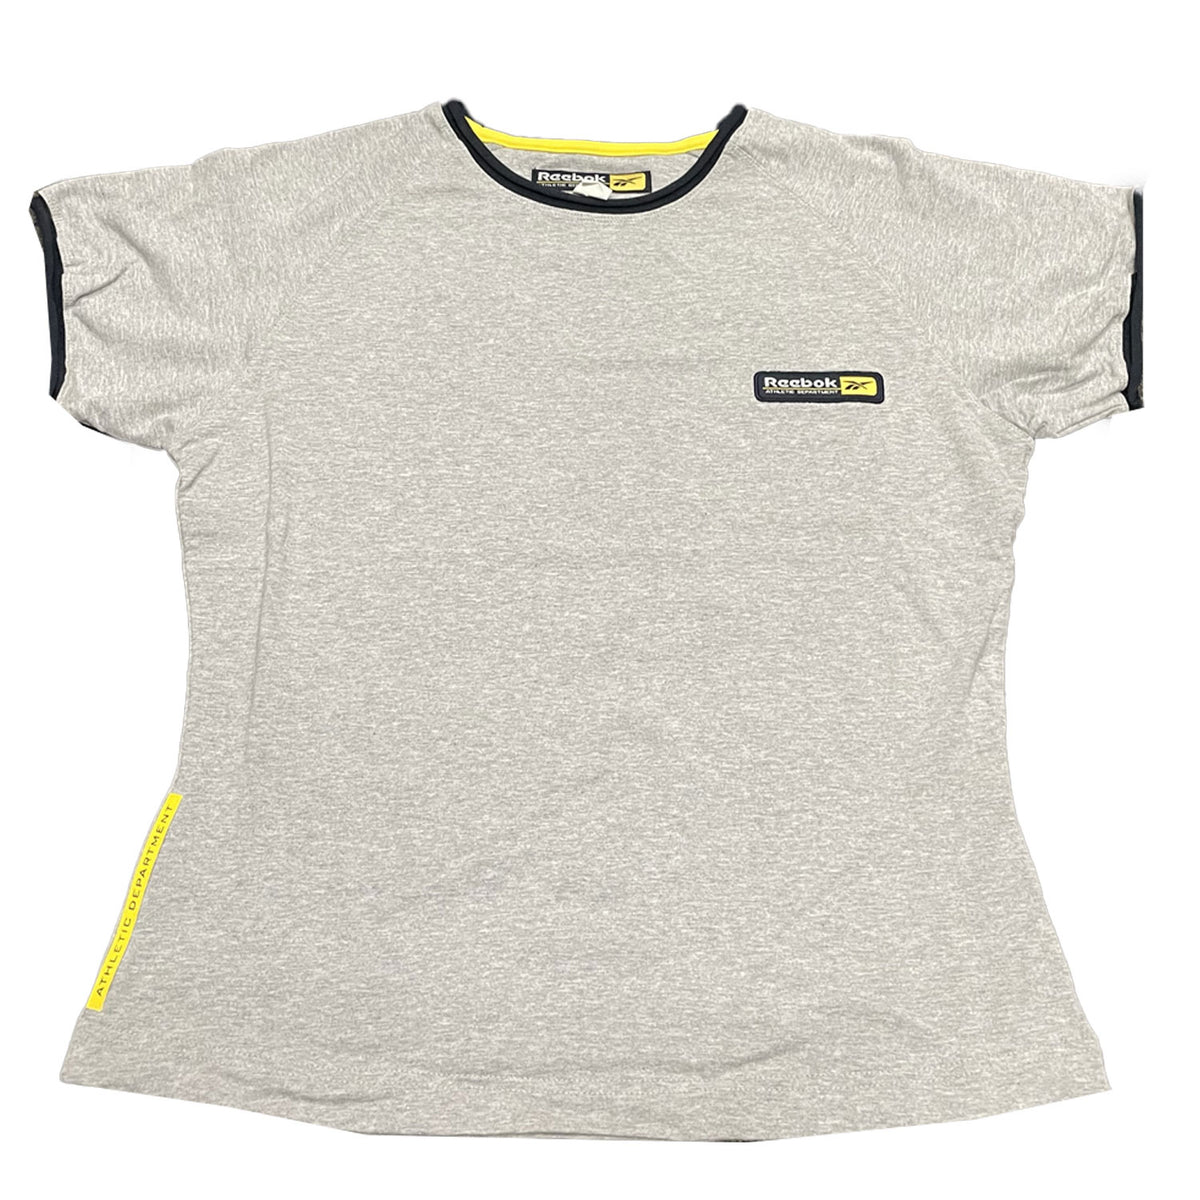 Reebok Womens Classic Athlete Style T-Shirt - Grey - UK Size 12